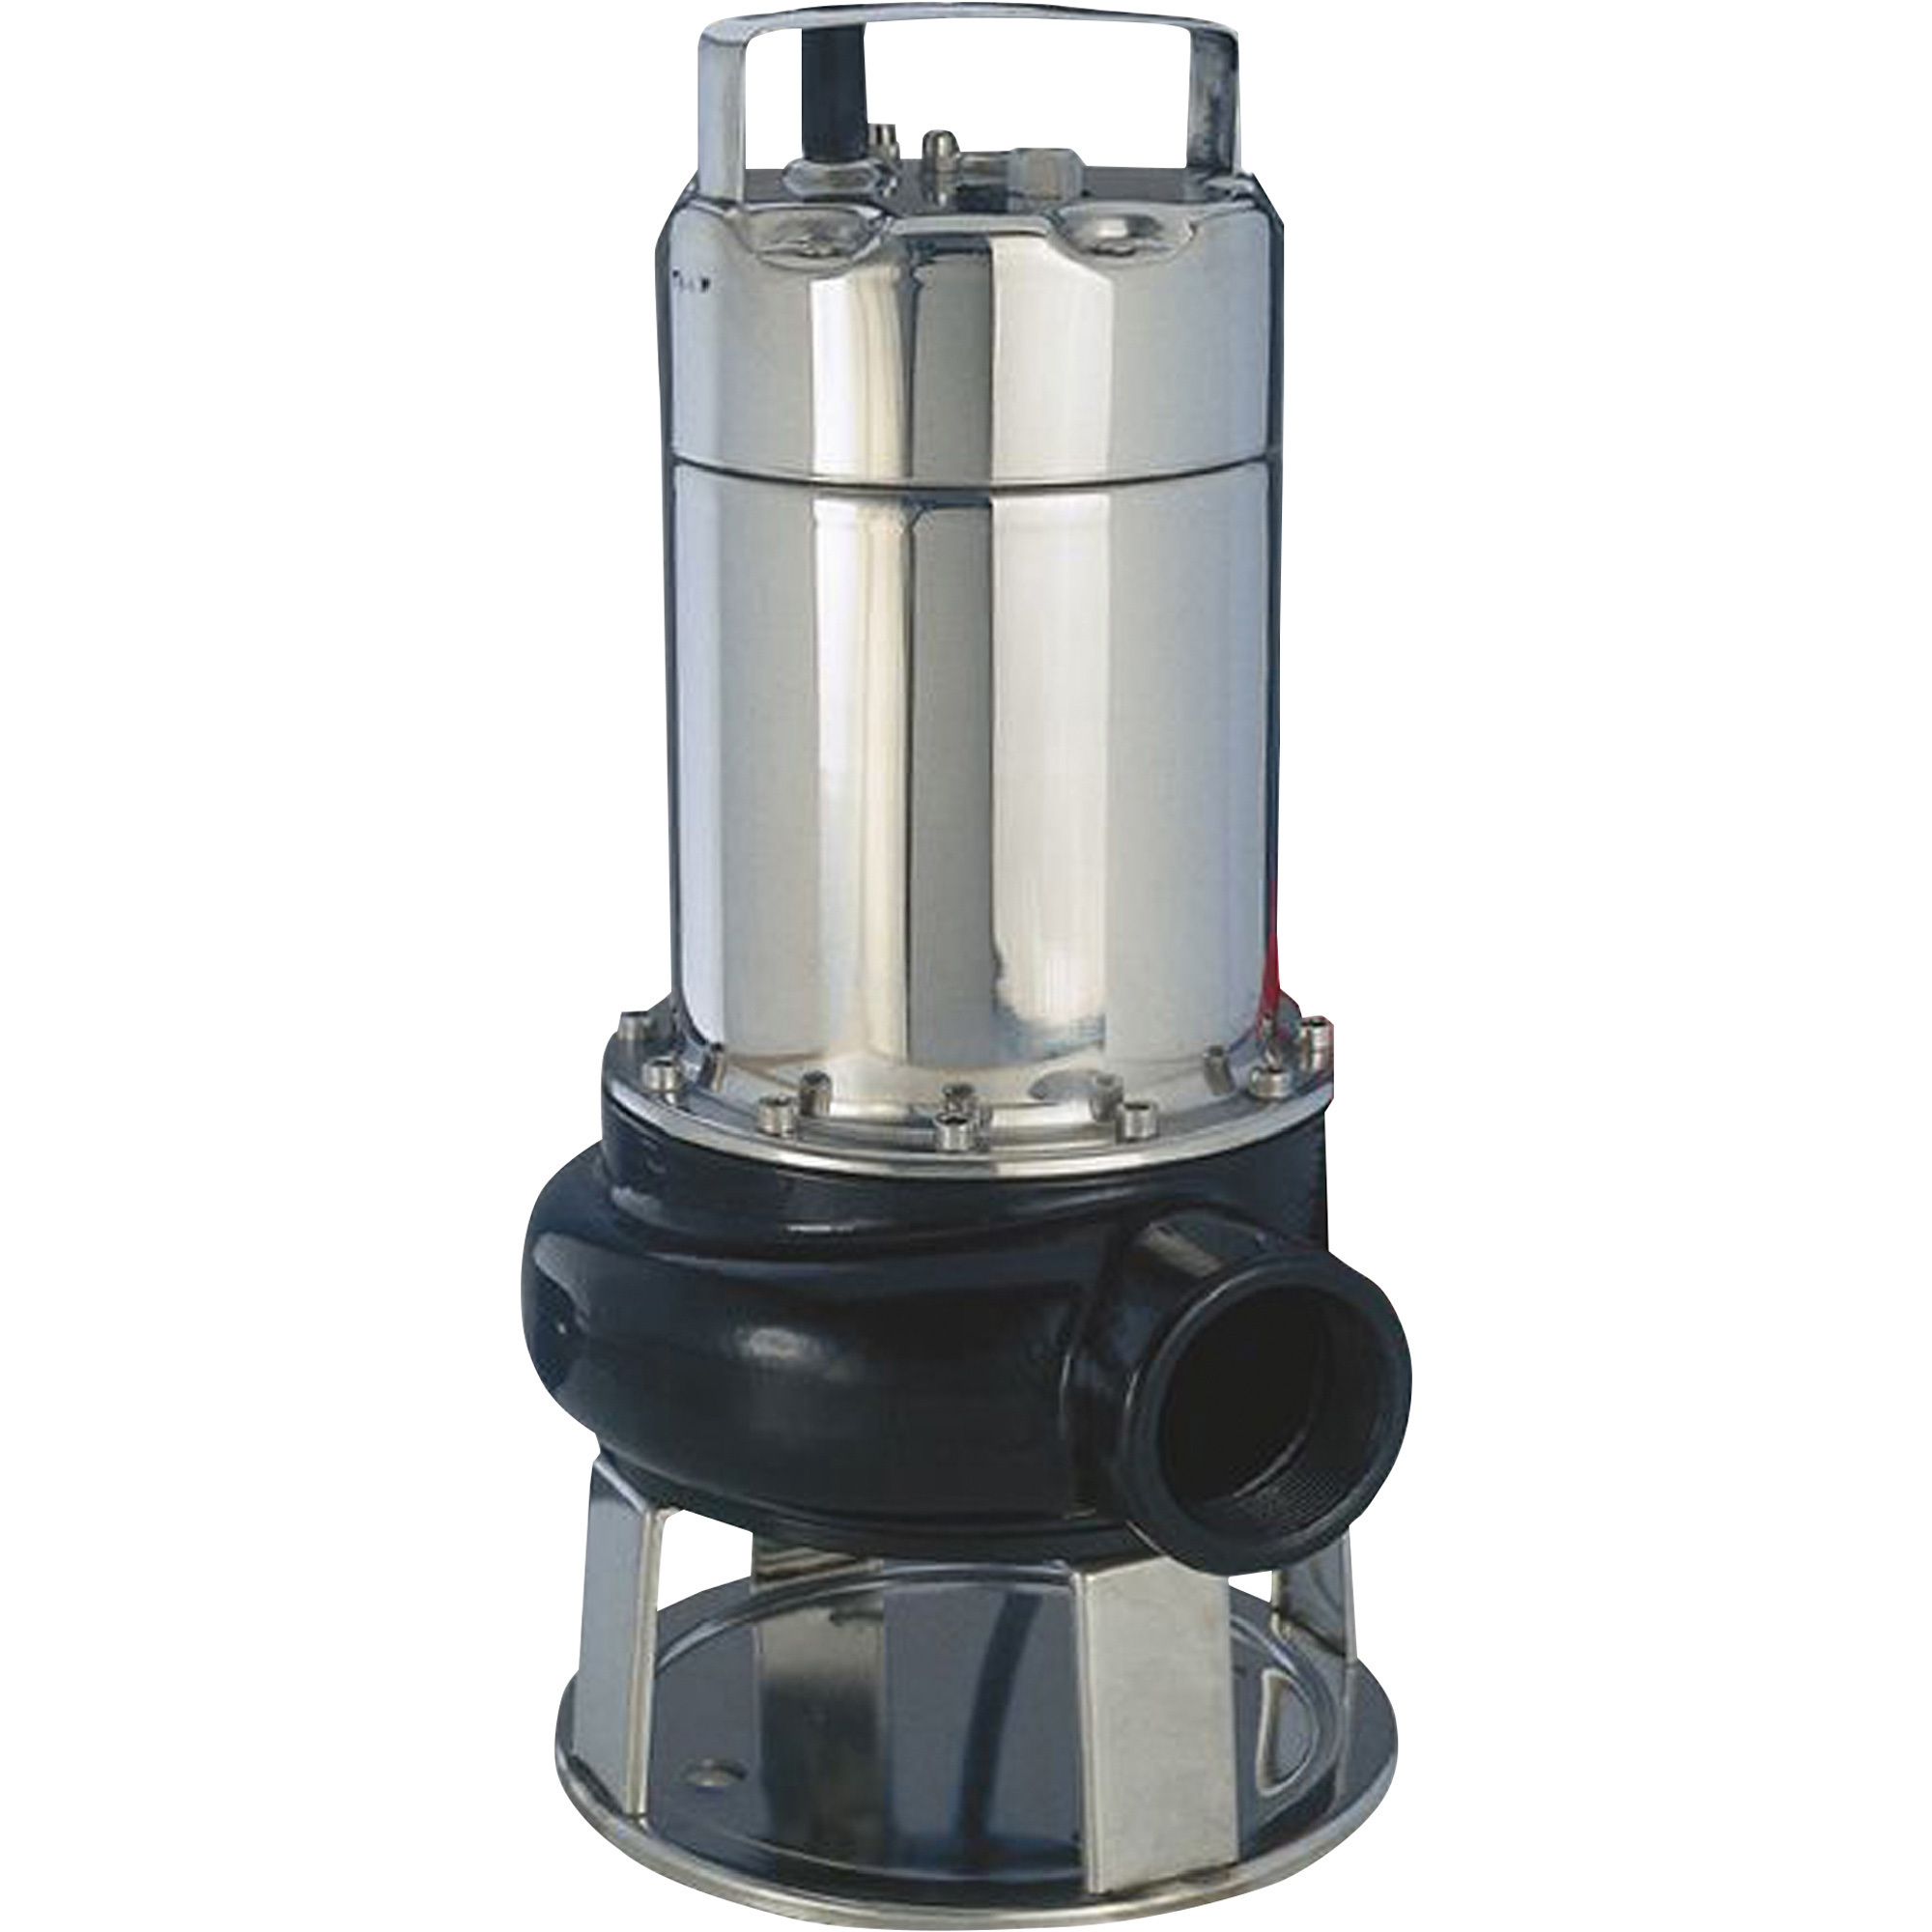 JMS-USA Submersible Sewage Grinder Water Pump, 3720 GPH, 2 HP, 3-Phase, Model JUTTER 140 TRI